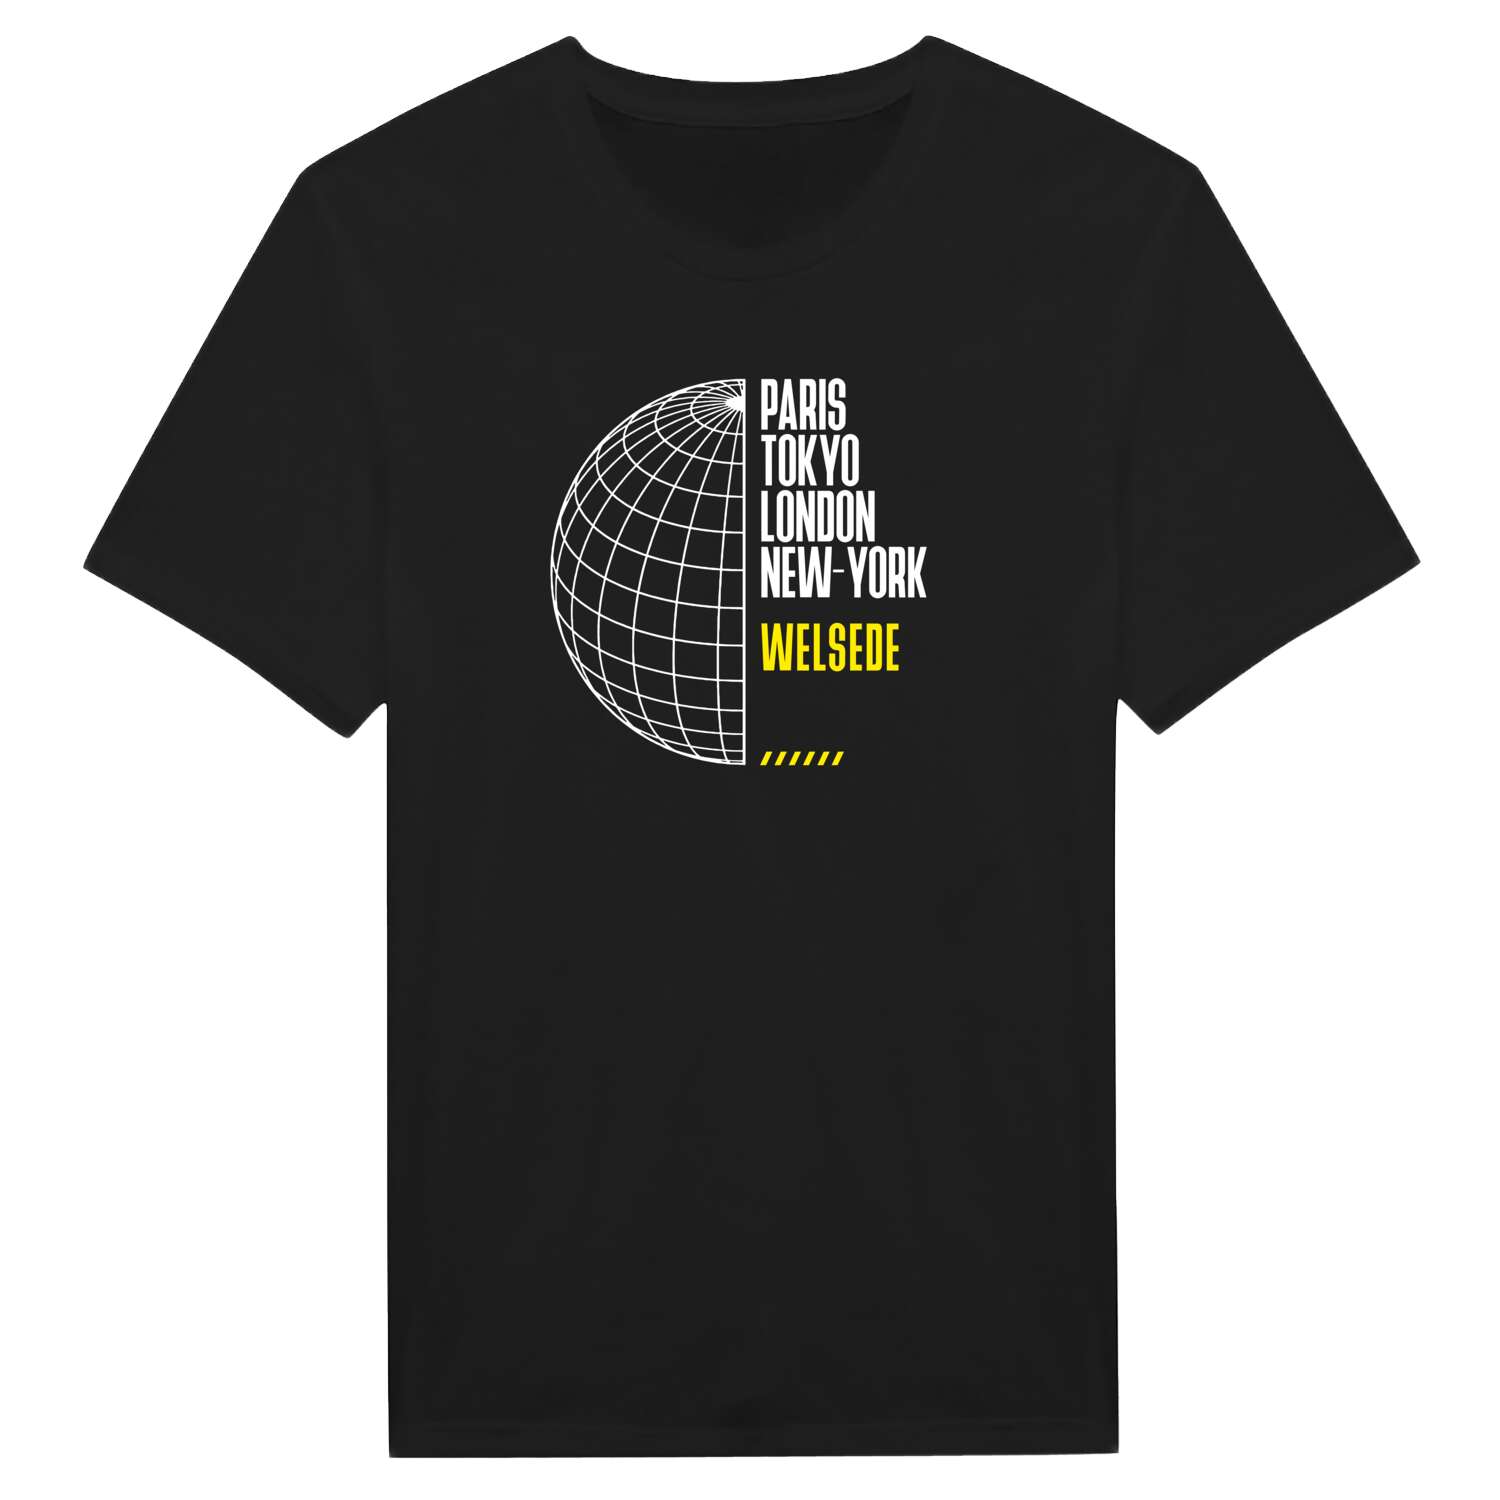 Welsede T-Shirt »Paris Tokyo London«